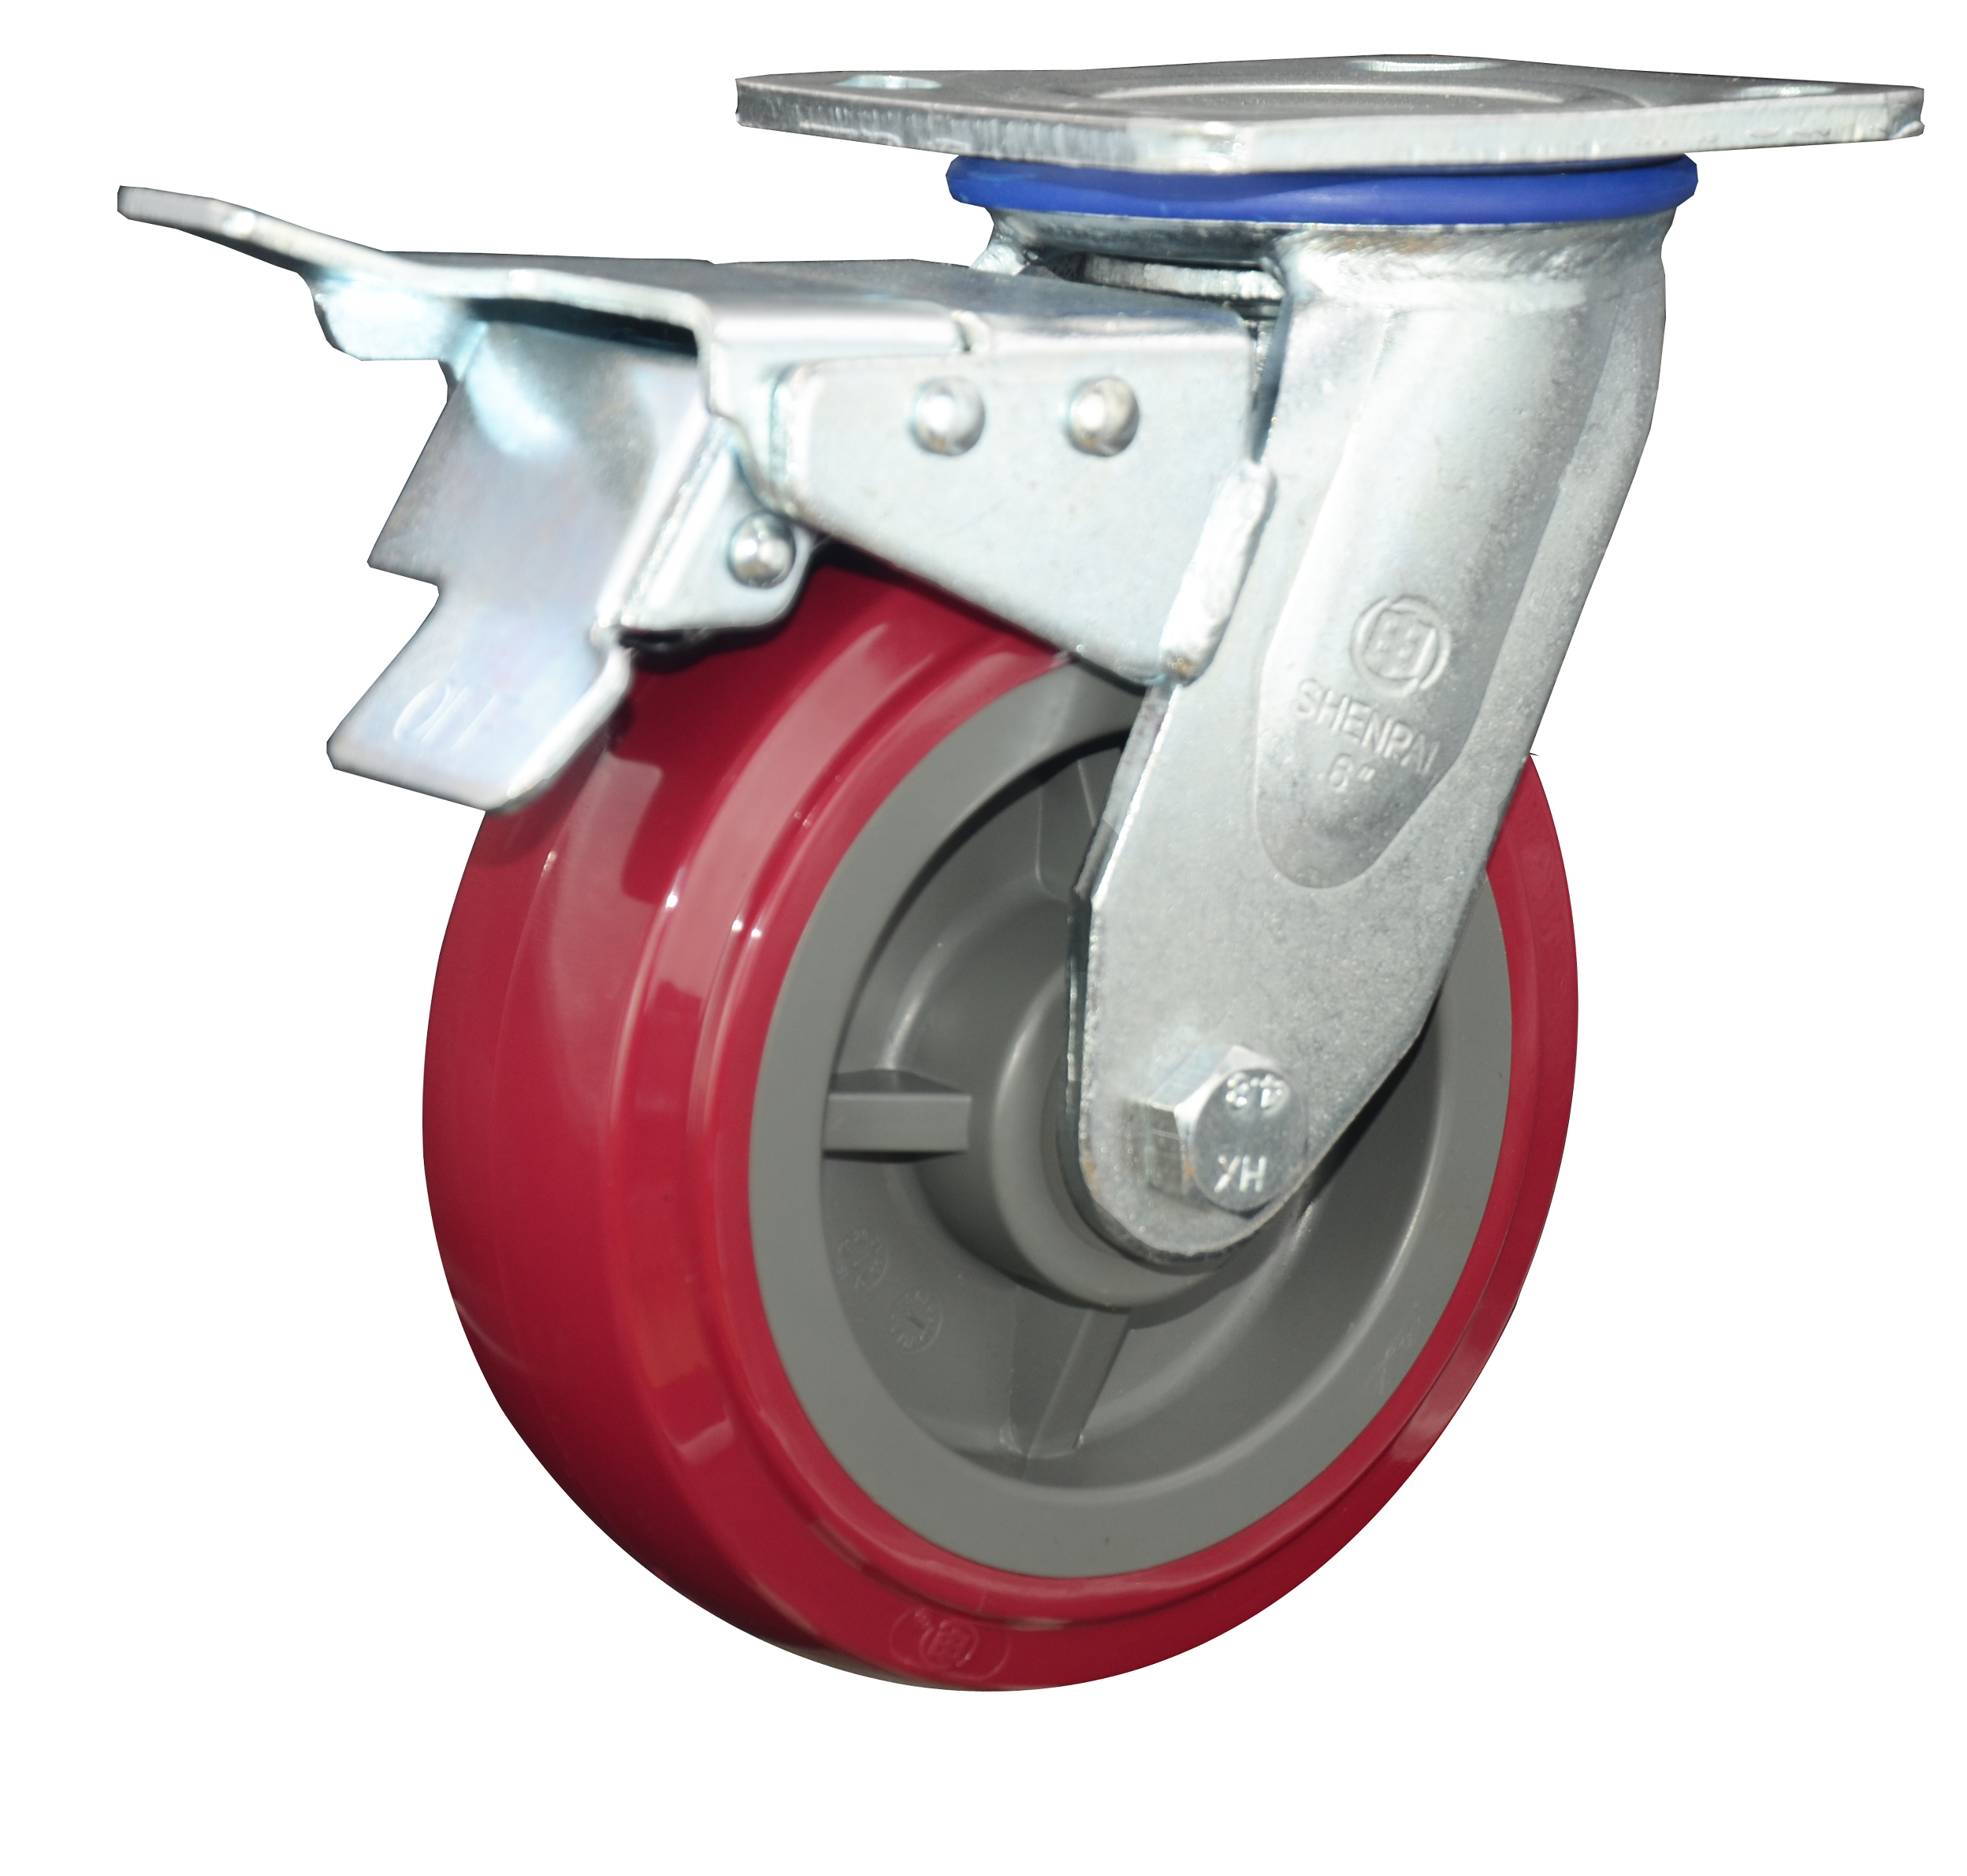 6 Inch Polyurethane Castor Wheel Swivel with brake 